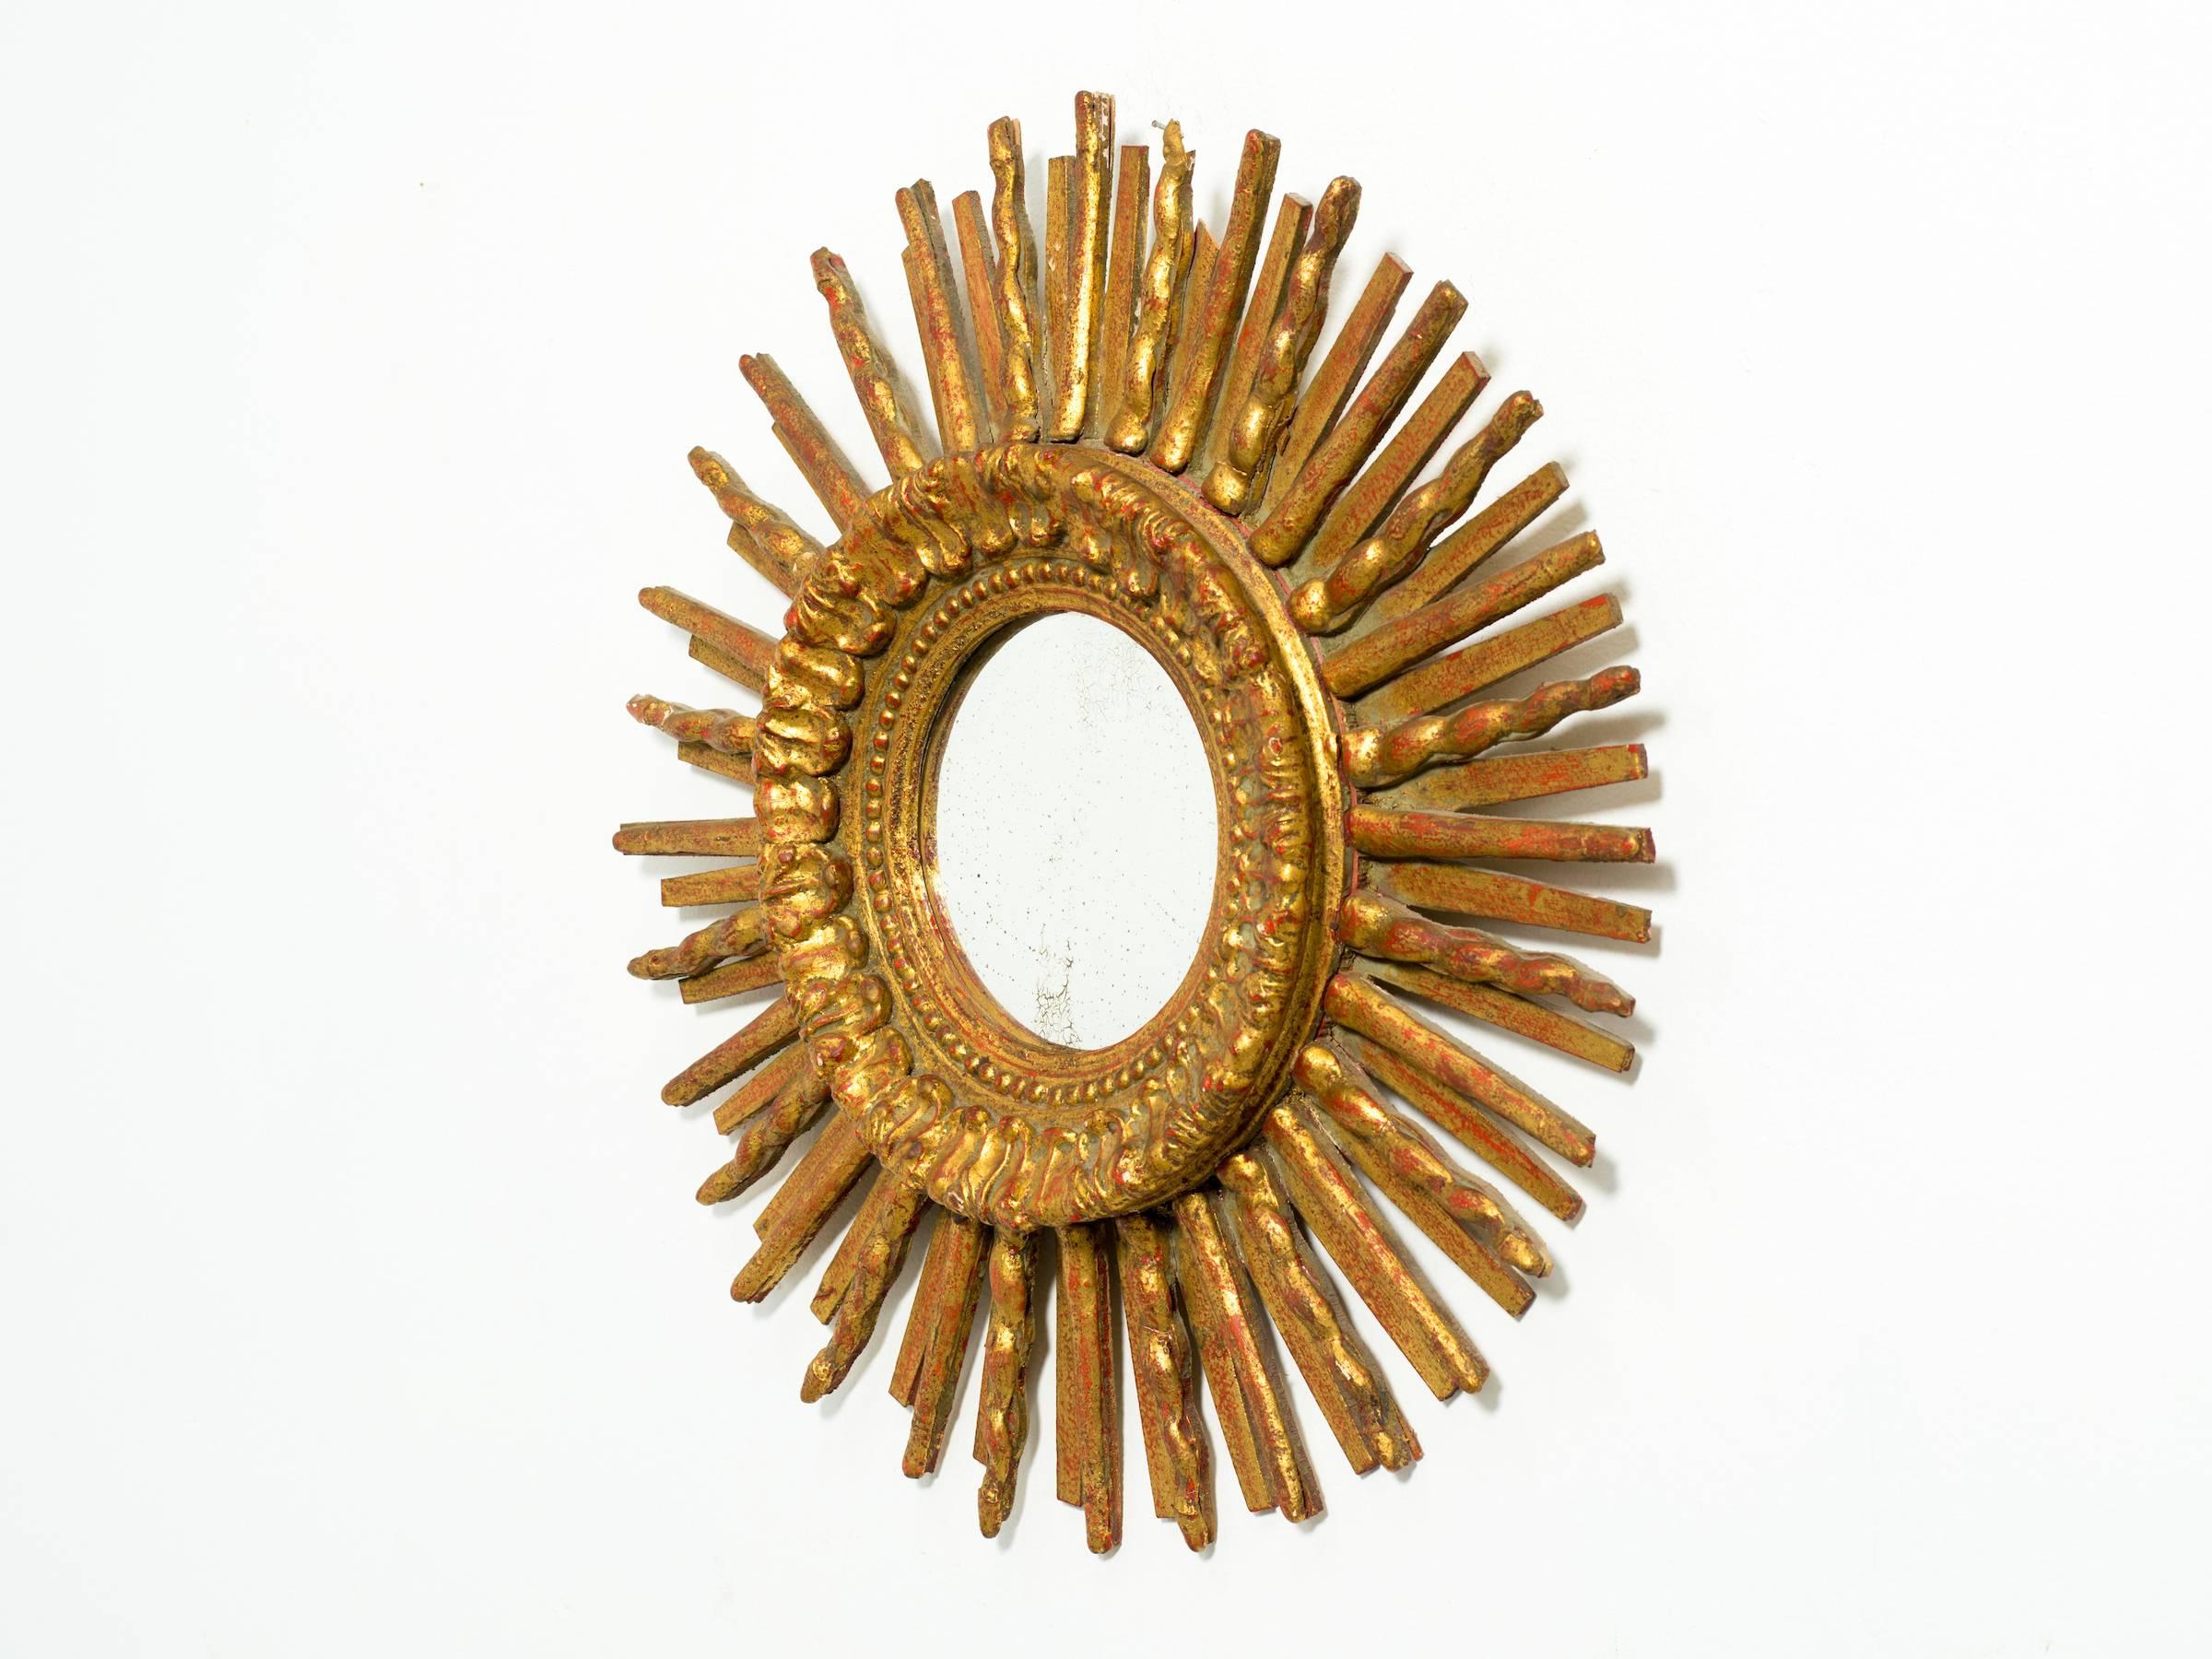 1960s giltwood sunburst mirror from Italy.